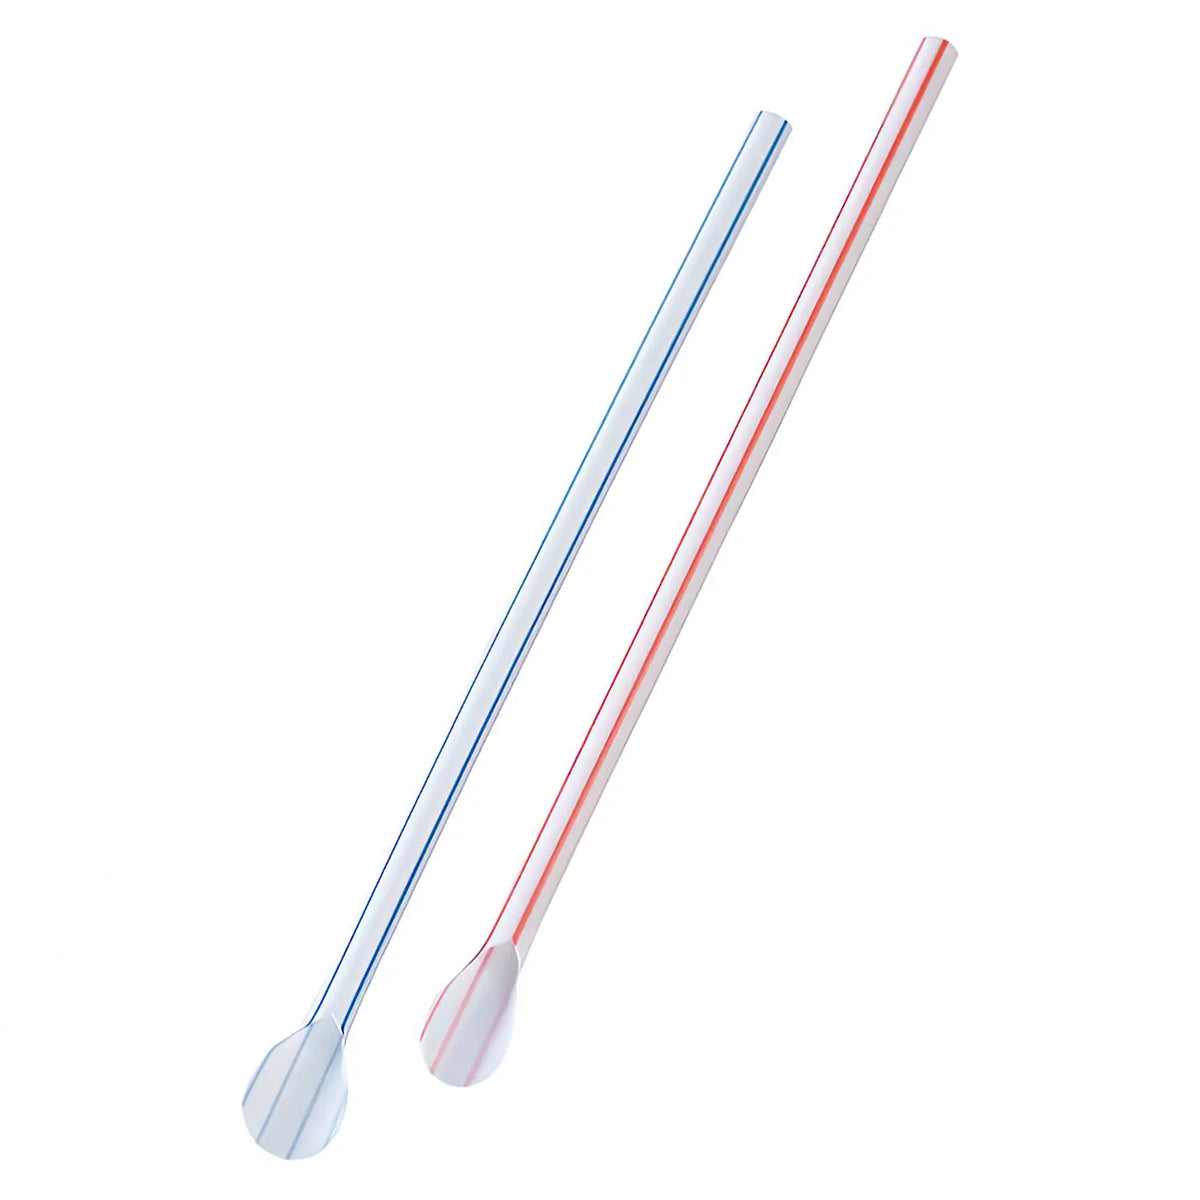 SUNNAP Polypropylene Spoon Straw 500 Sticks